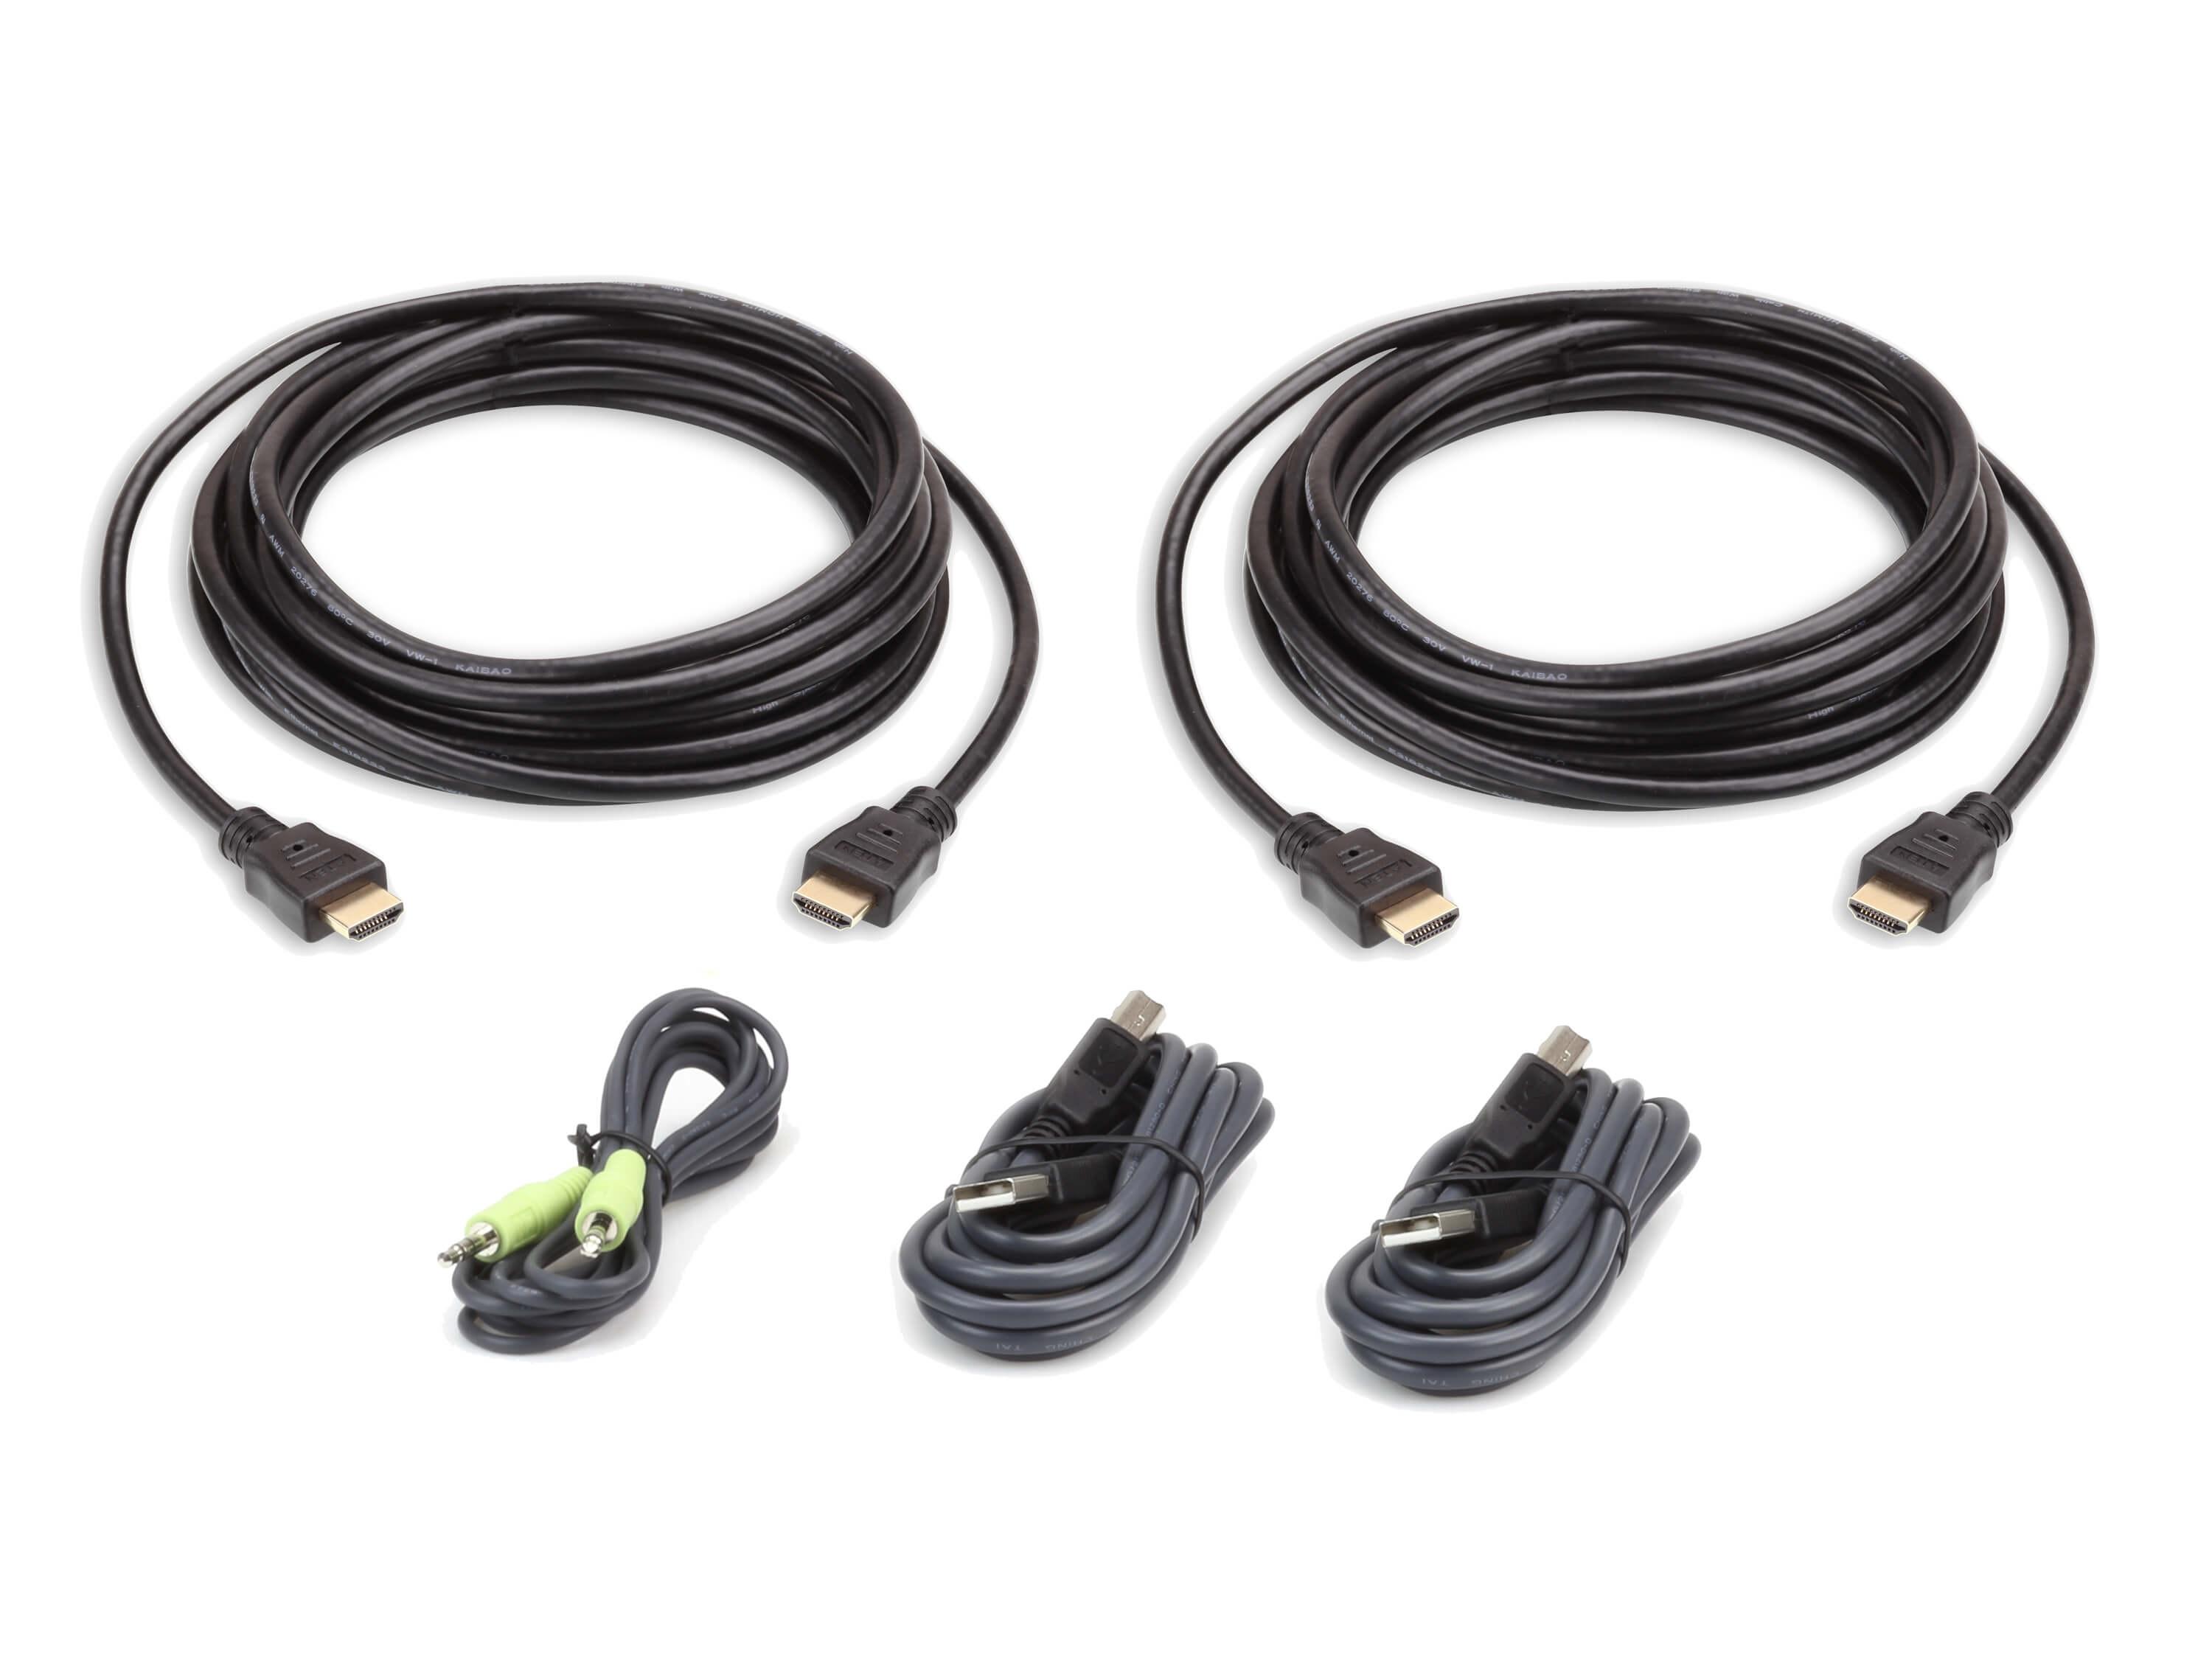 2L-7D03UHX5 3m USB HDMI Dual Display Secure KVM Cable Kit by Aten